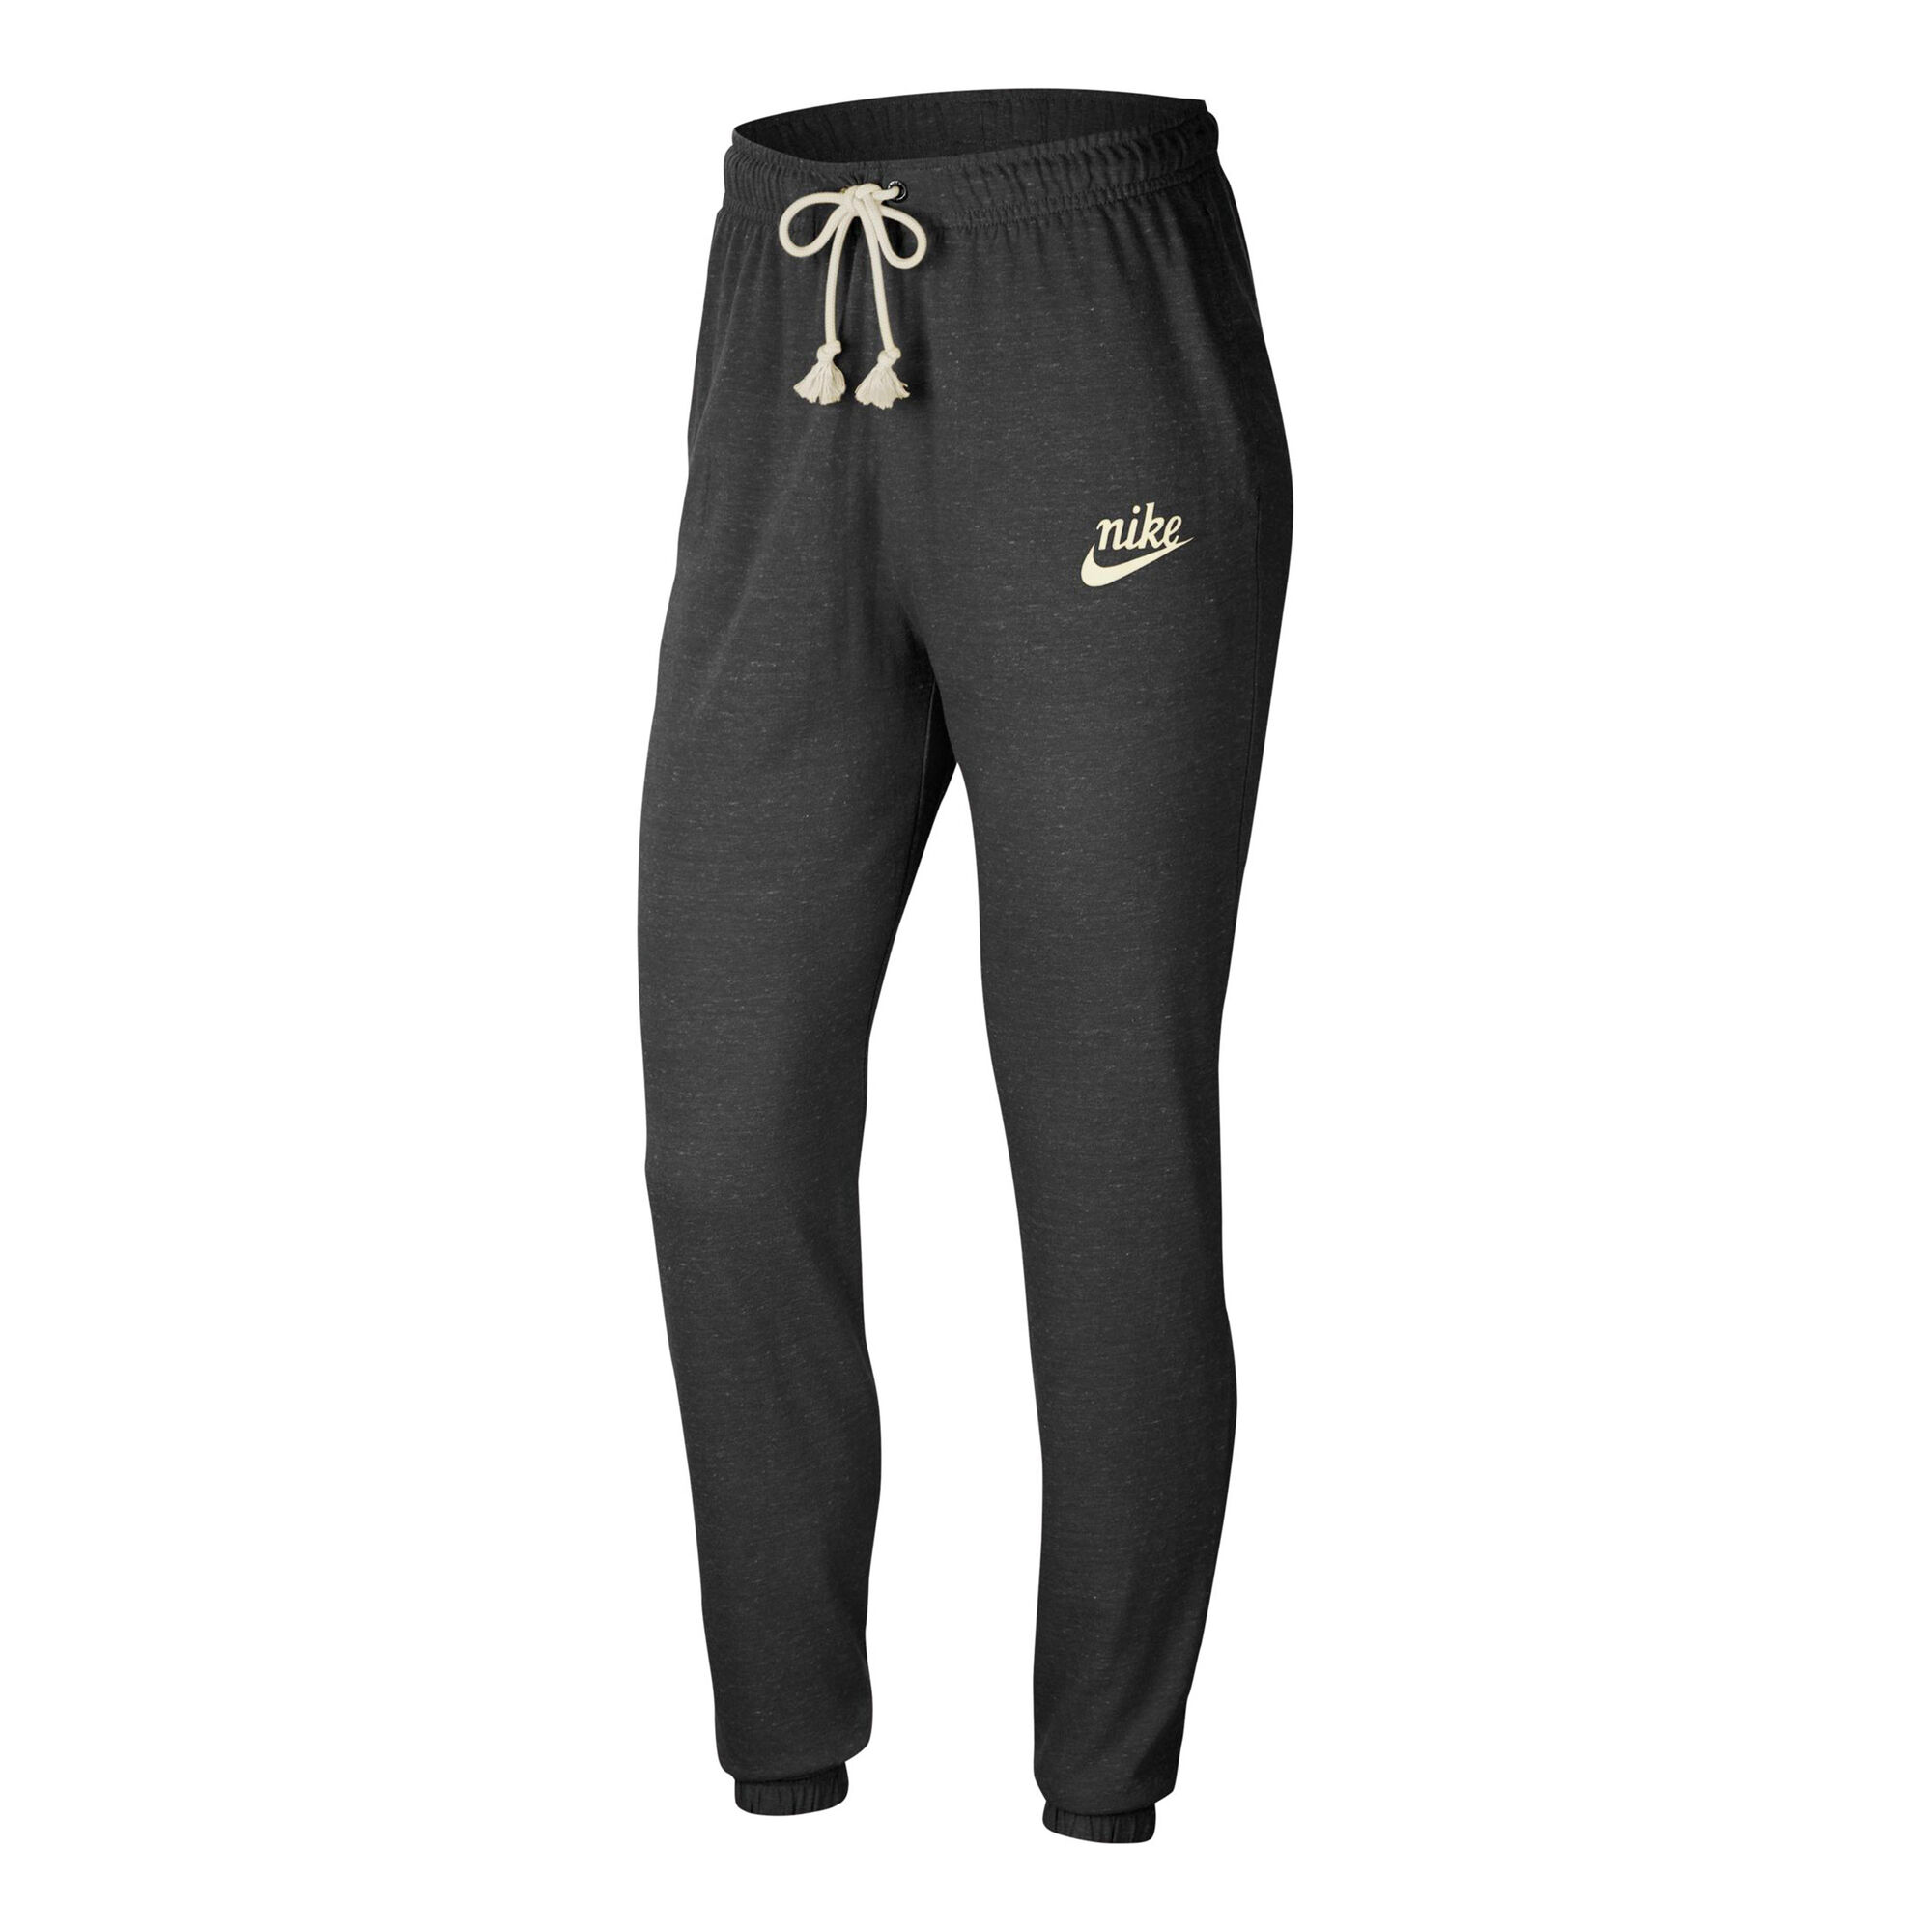 NIKE Women's Power Training Pants, Black/Cool Grey, X-Small, Pants